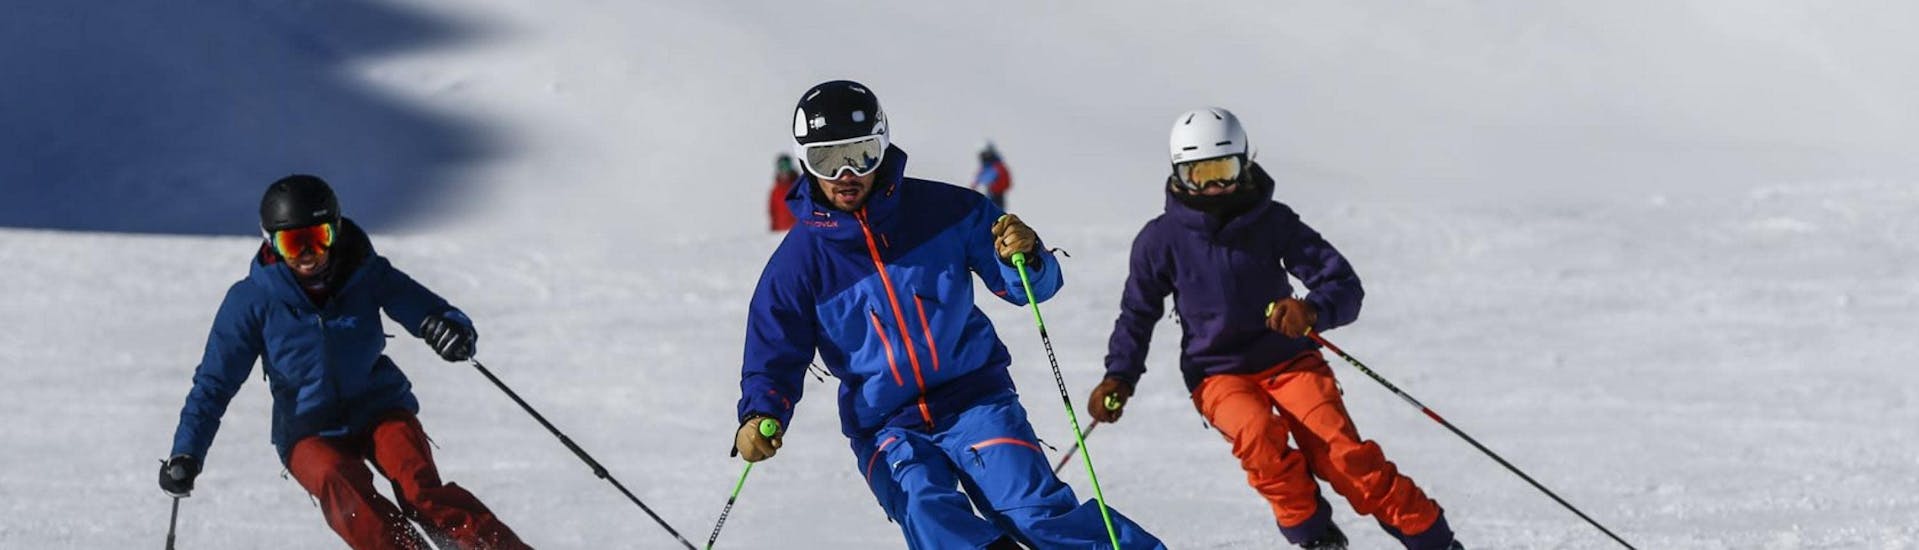 Adult Ski Lessons for Advanced Skiers with Swiss Ski School Samnaun - Hero image